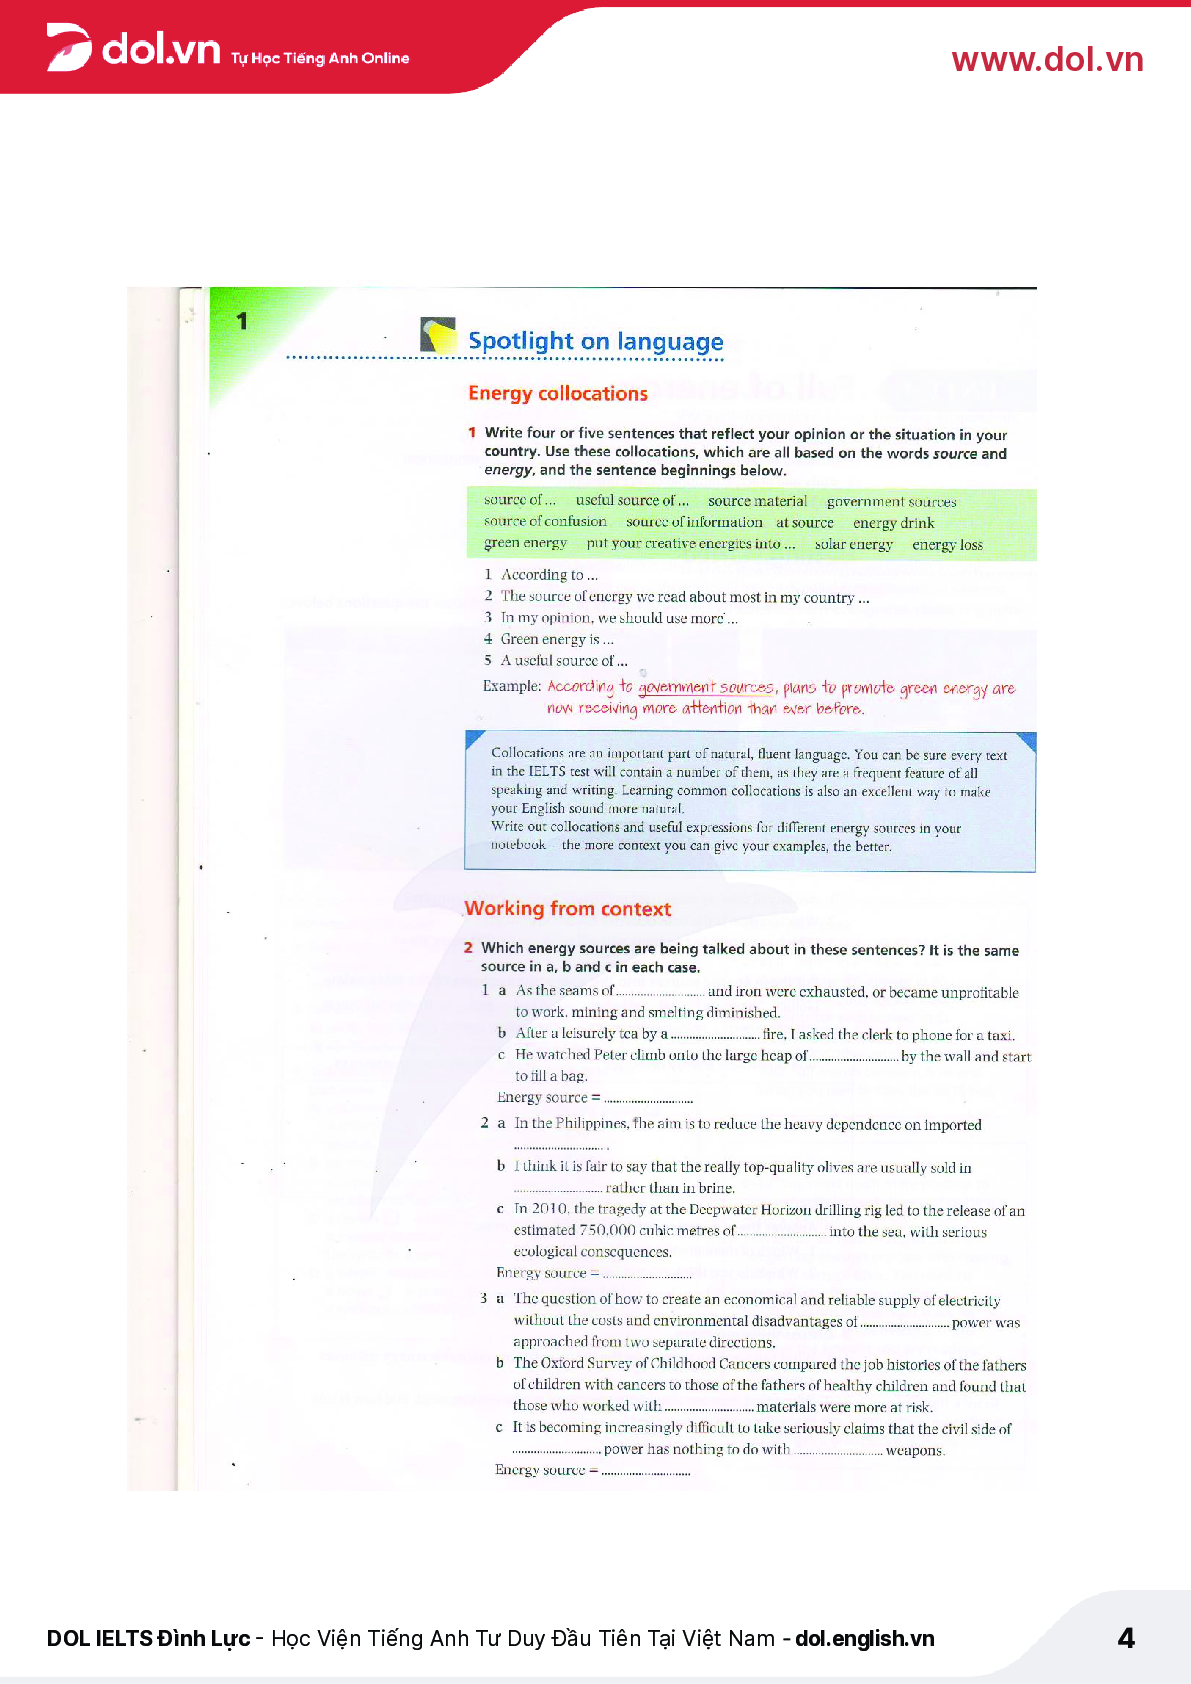 Sách IELTS Advantage Reading Skills pdf | Xem online, tải PDF miễn phí (trang 4)